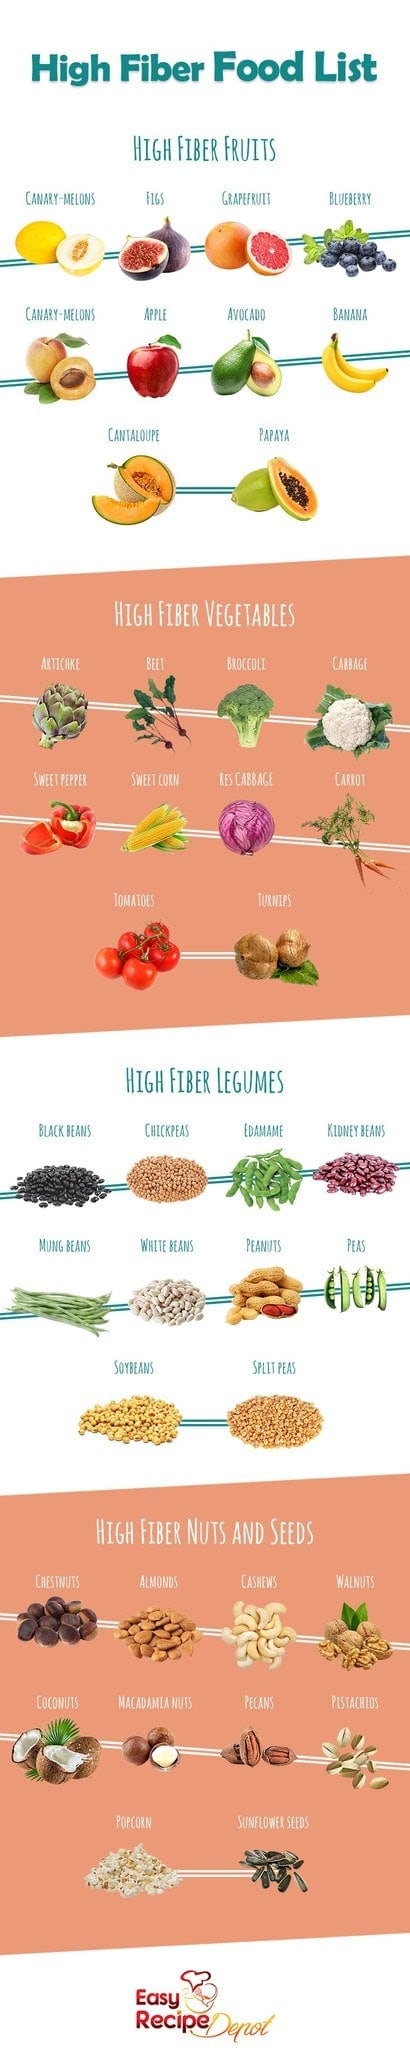 high fiber foods pdf